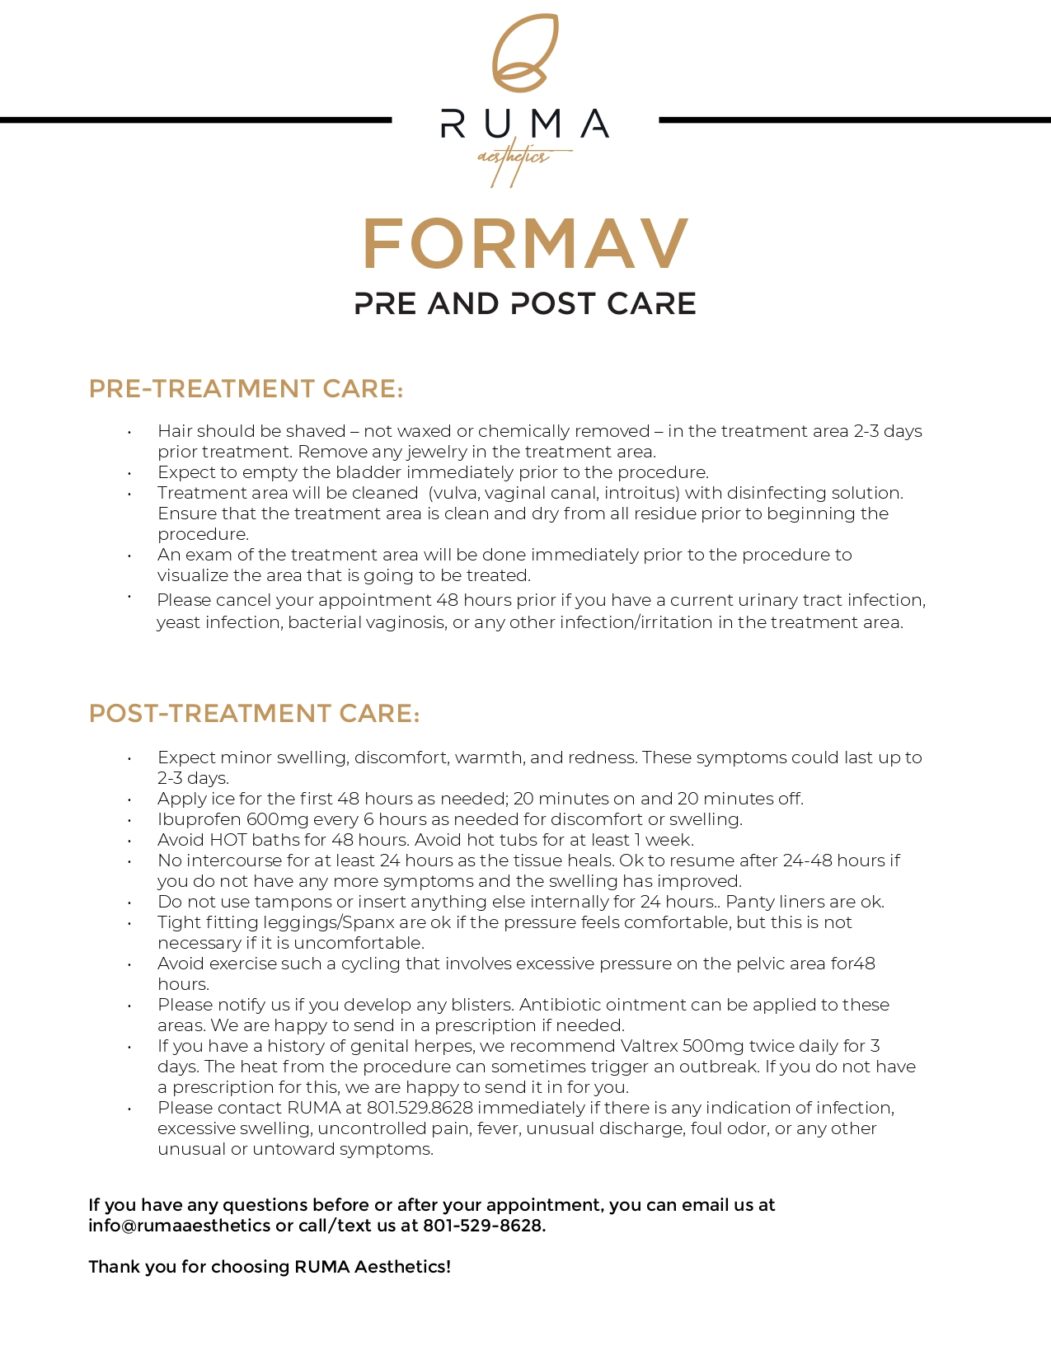 FORMAV Pre and Post Care